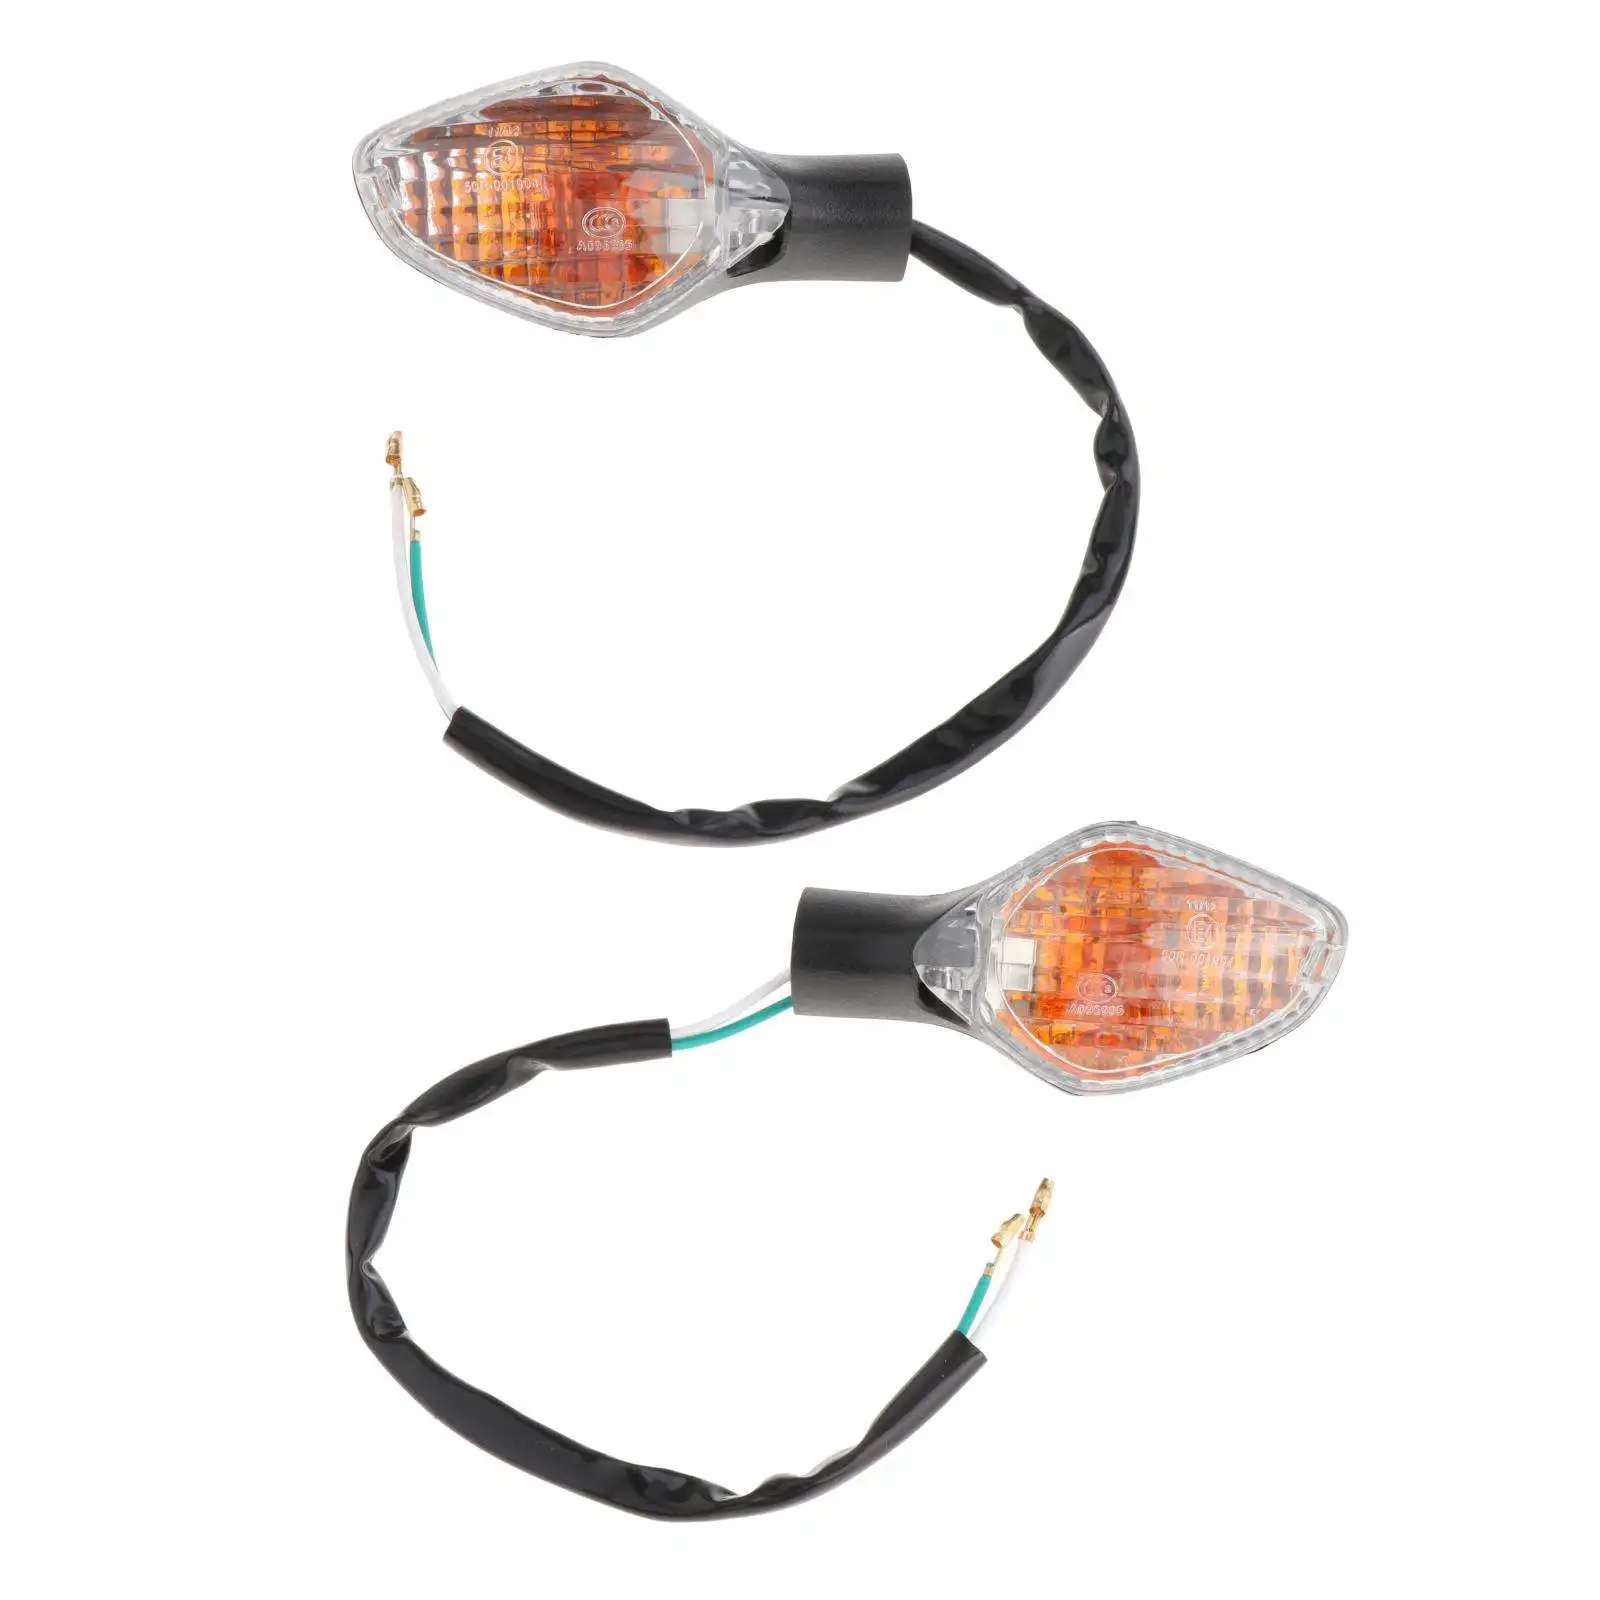 

2x Motorcycle LED Turn Signal Light Indicator Turning Lamp Cornering Lamp for Honda CBR500 Parts Accessories Waterproof